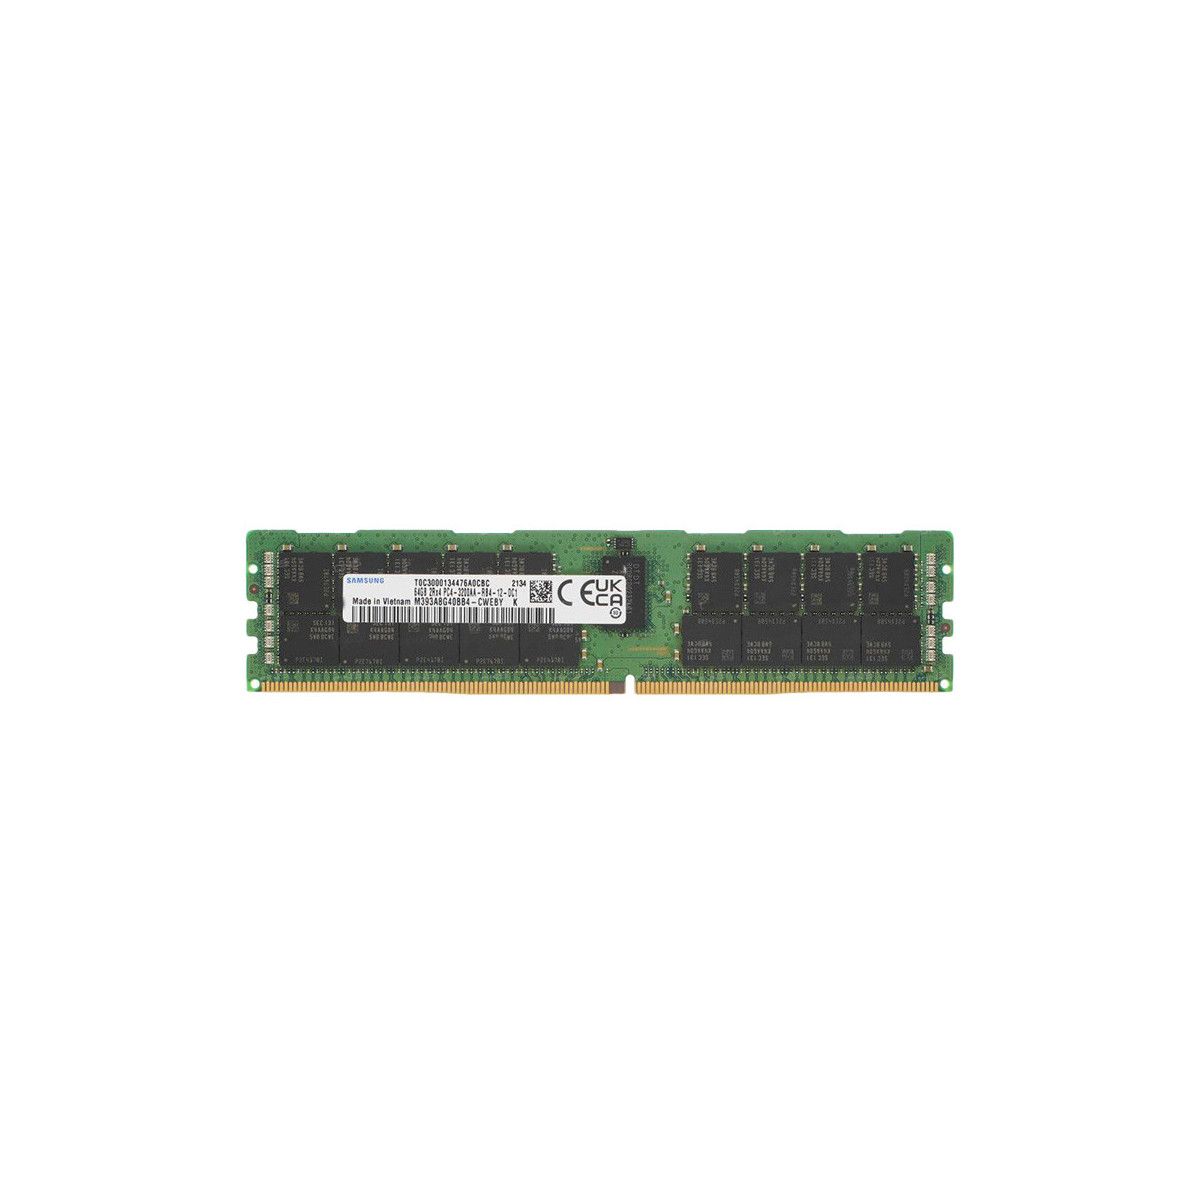 P06035-H21-MS - Memstar 1x 64GB DDR4-3200 RDIMM PC4-25600R - Mem-star OEM compatibile Memoria 1 - Memstar 